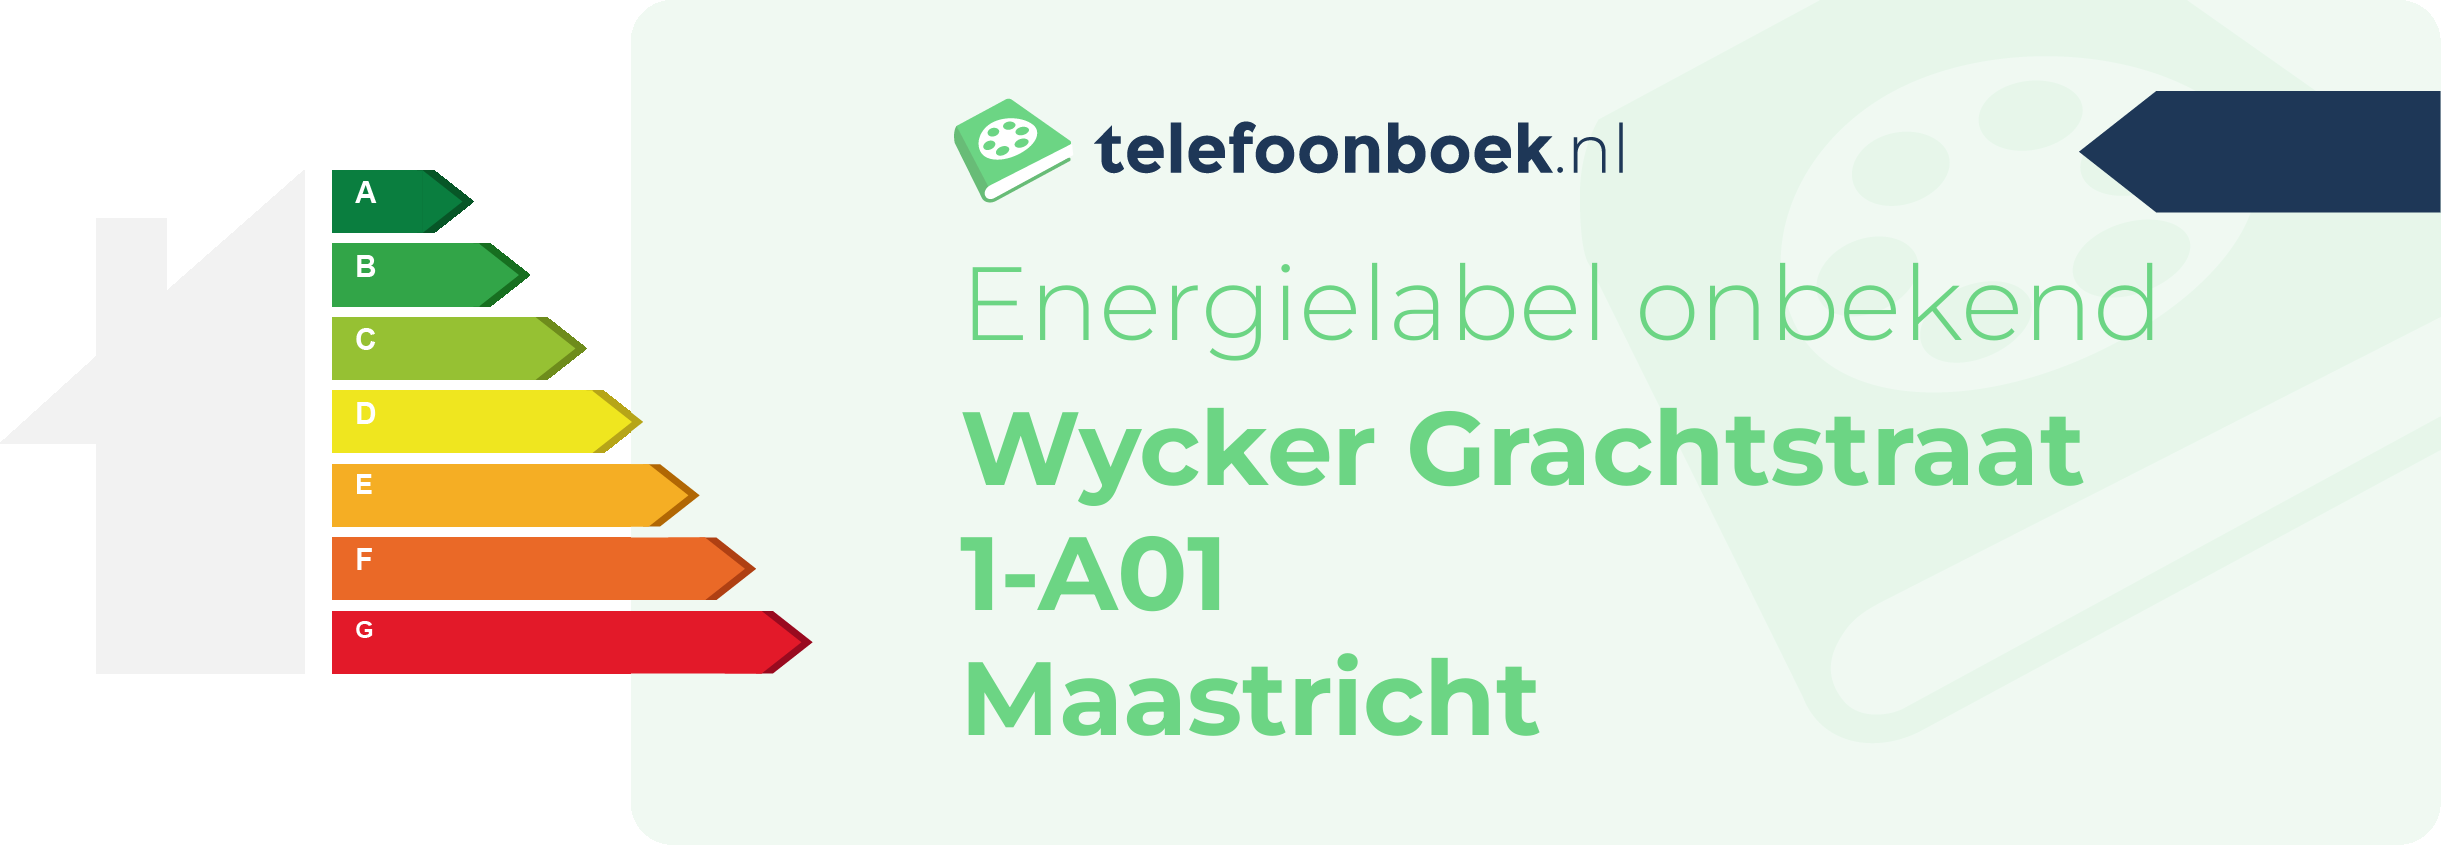 Energielabel Wycker Grachtstraat 1-A01 Maastricht